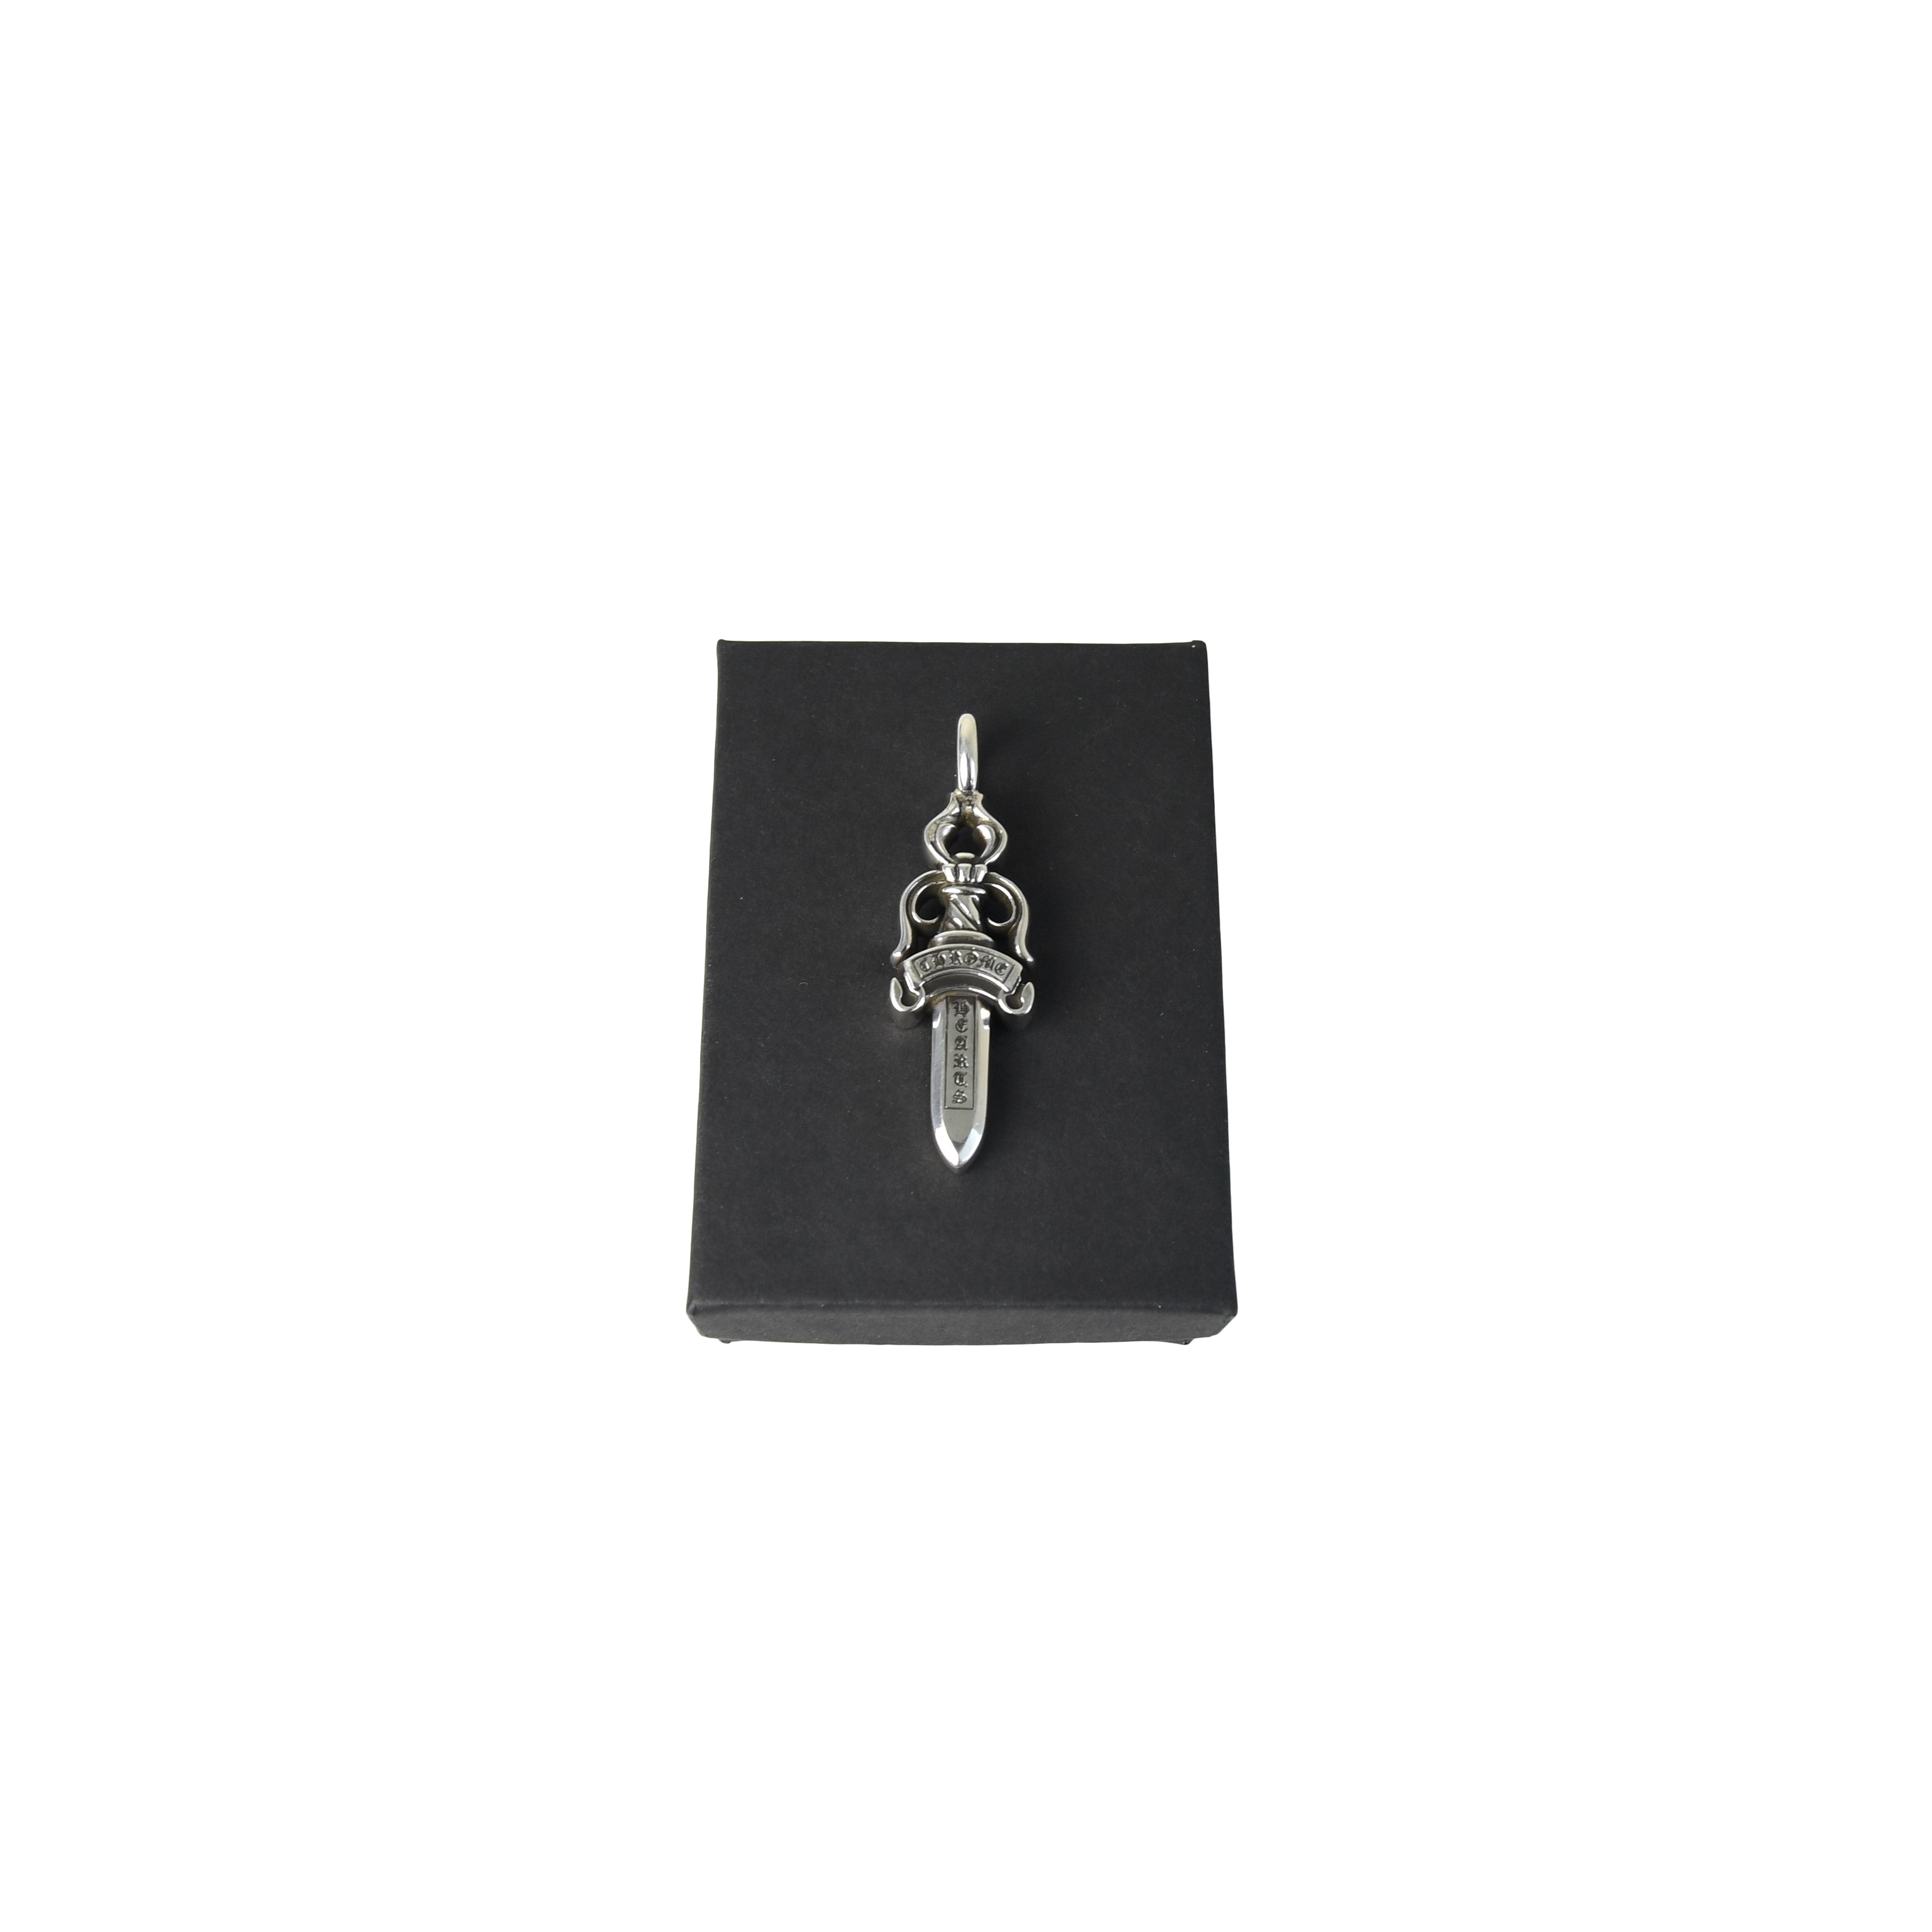 Chrome Hearts Dagger Pendant Necklace 925 Silver | eBay